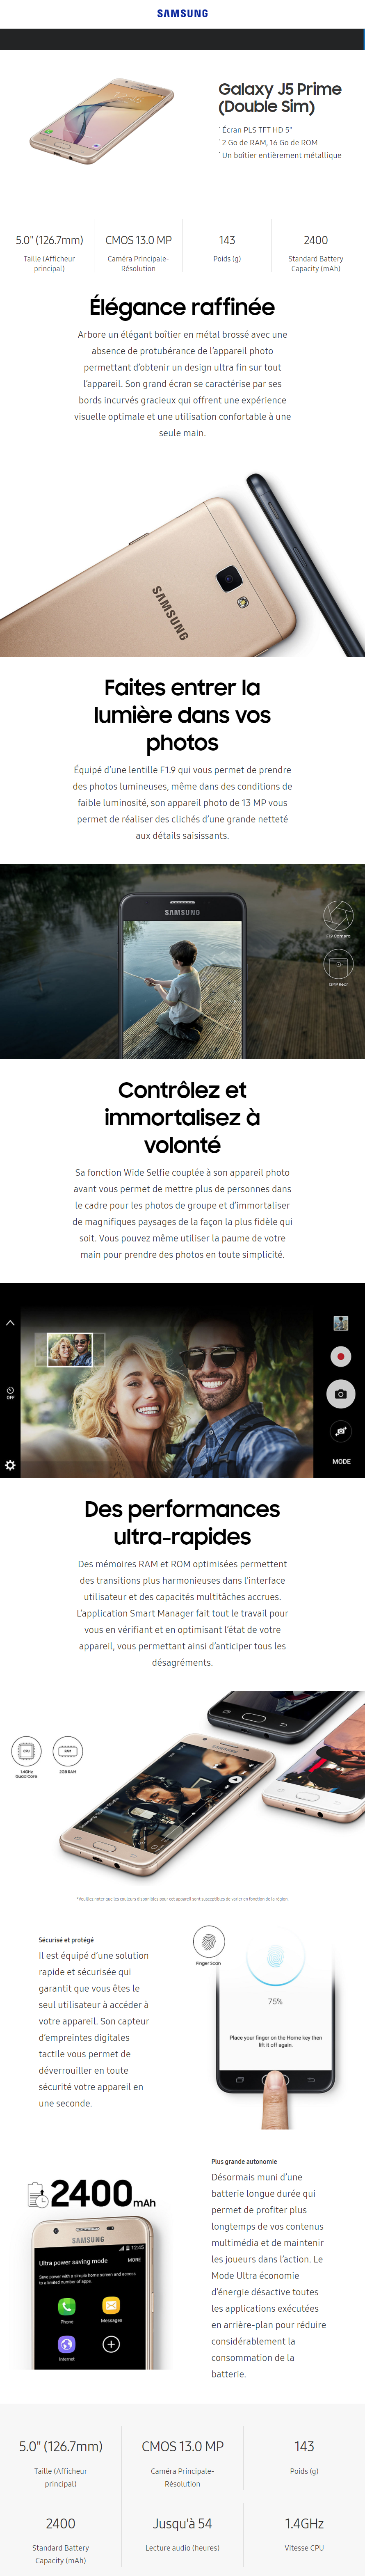 Acheter Smartphone Samsung Galaxy J5 Prime 5" (Double Sim) Maroc